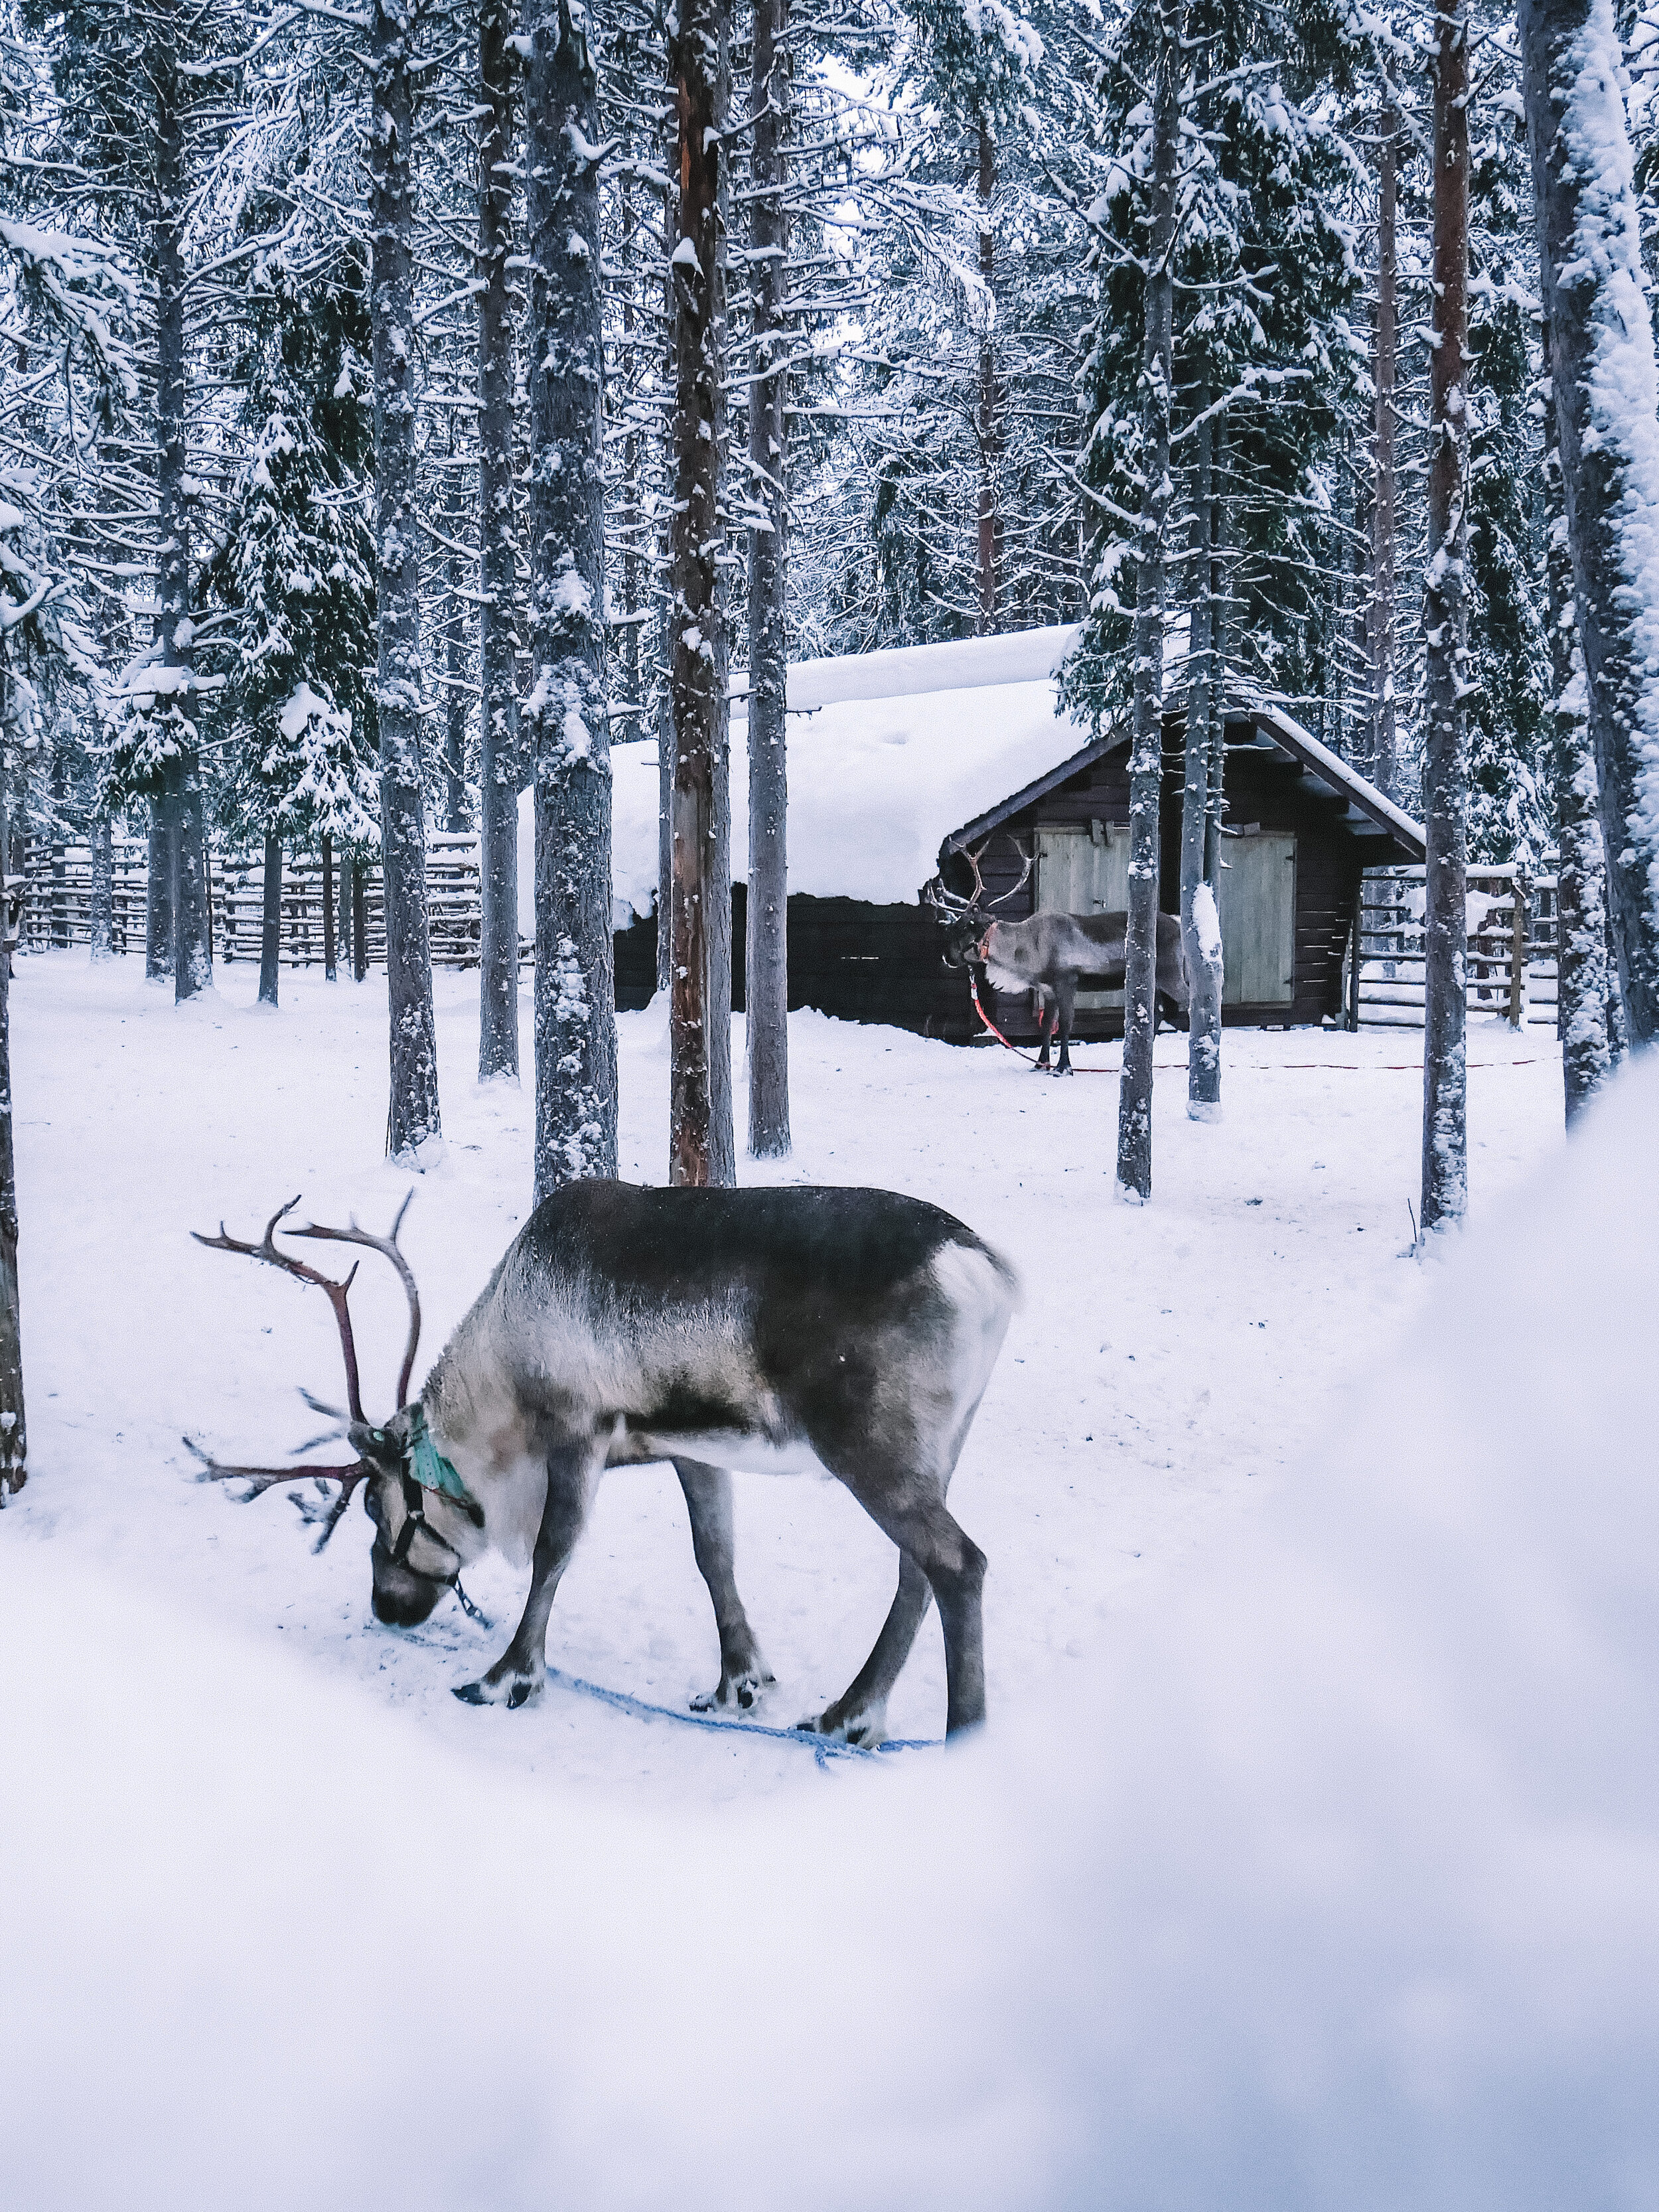 Kittila Reindeer - Lapland - Finland